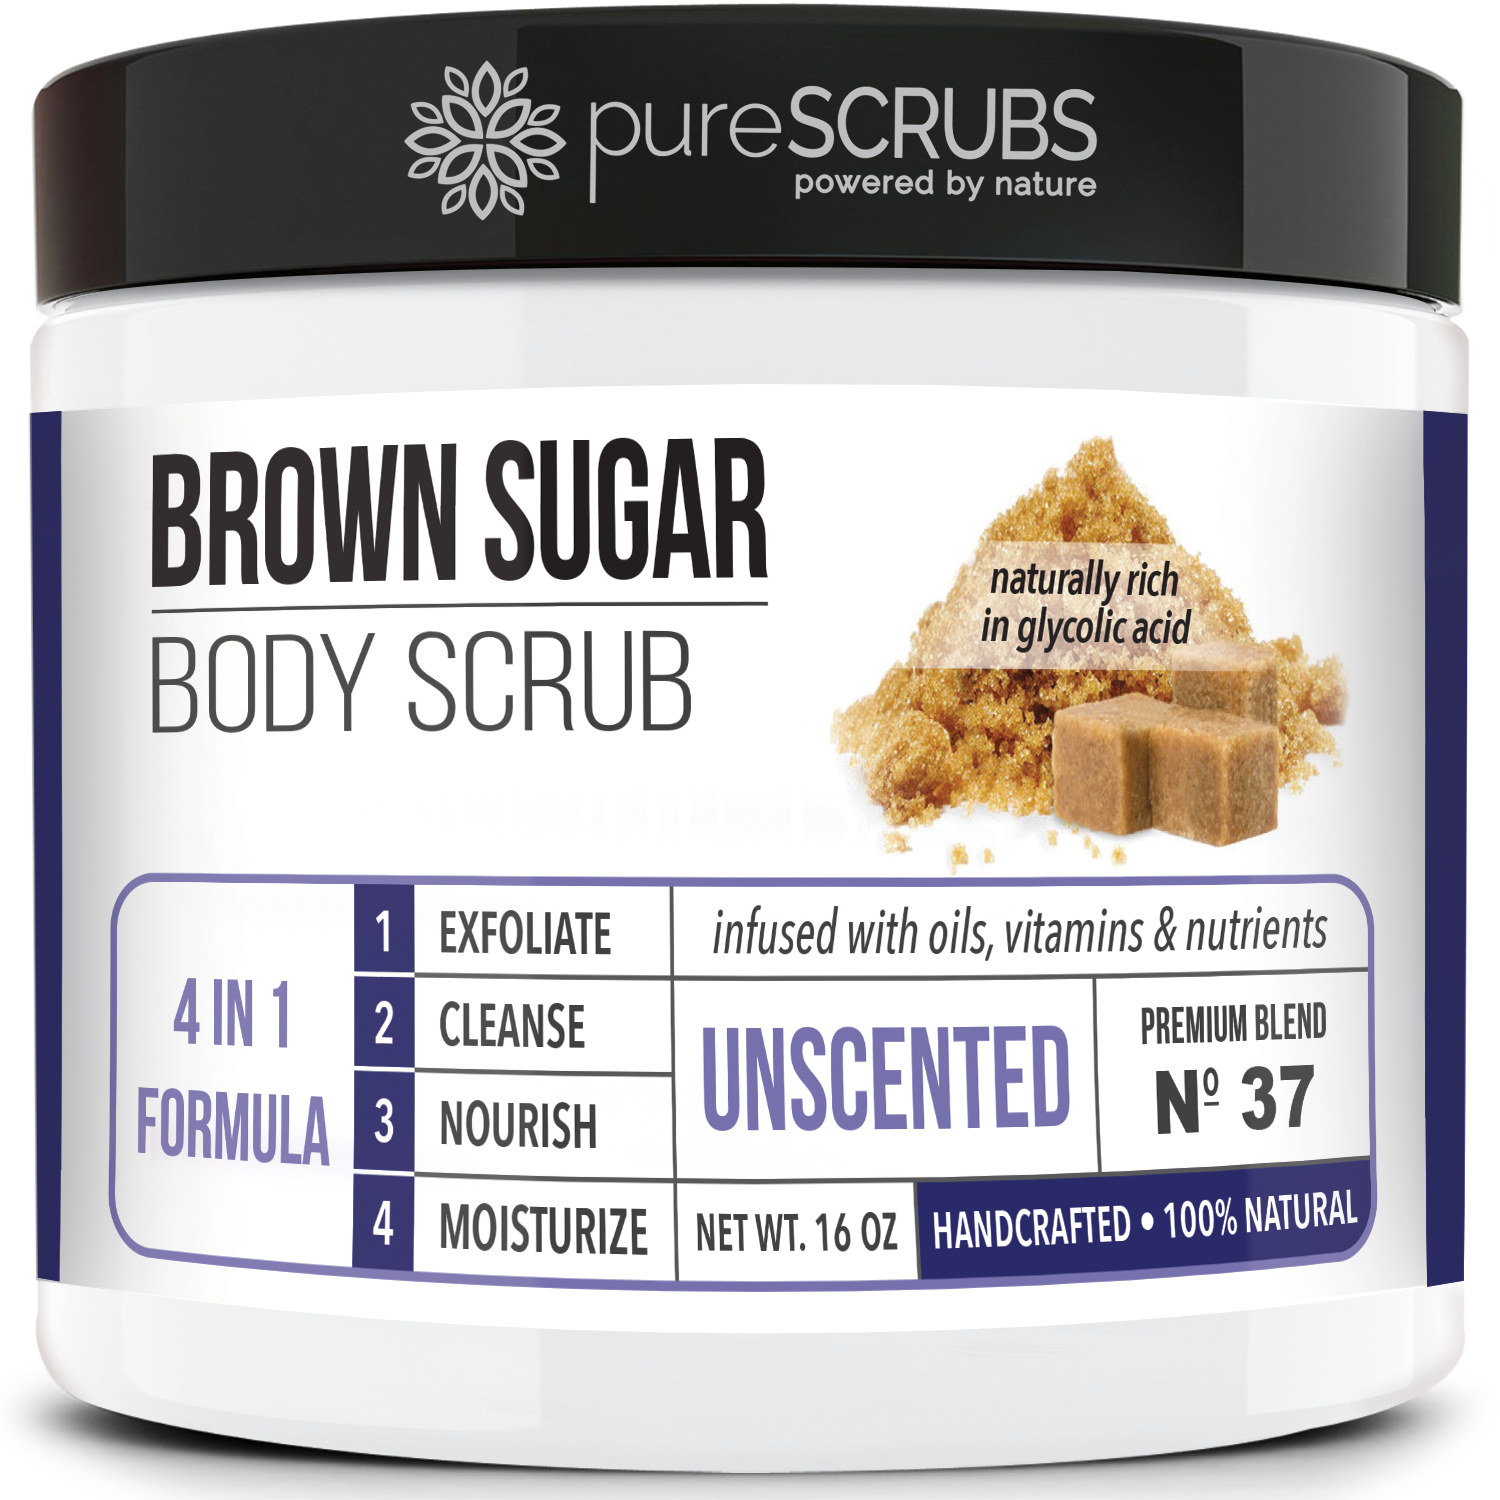 Unscented Body Scrub / Brown Sugar / Premium Blend #37